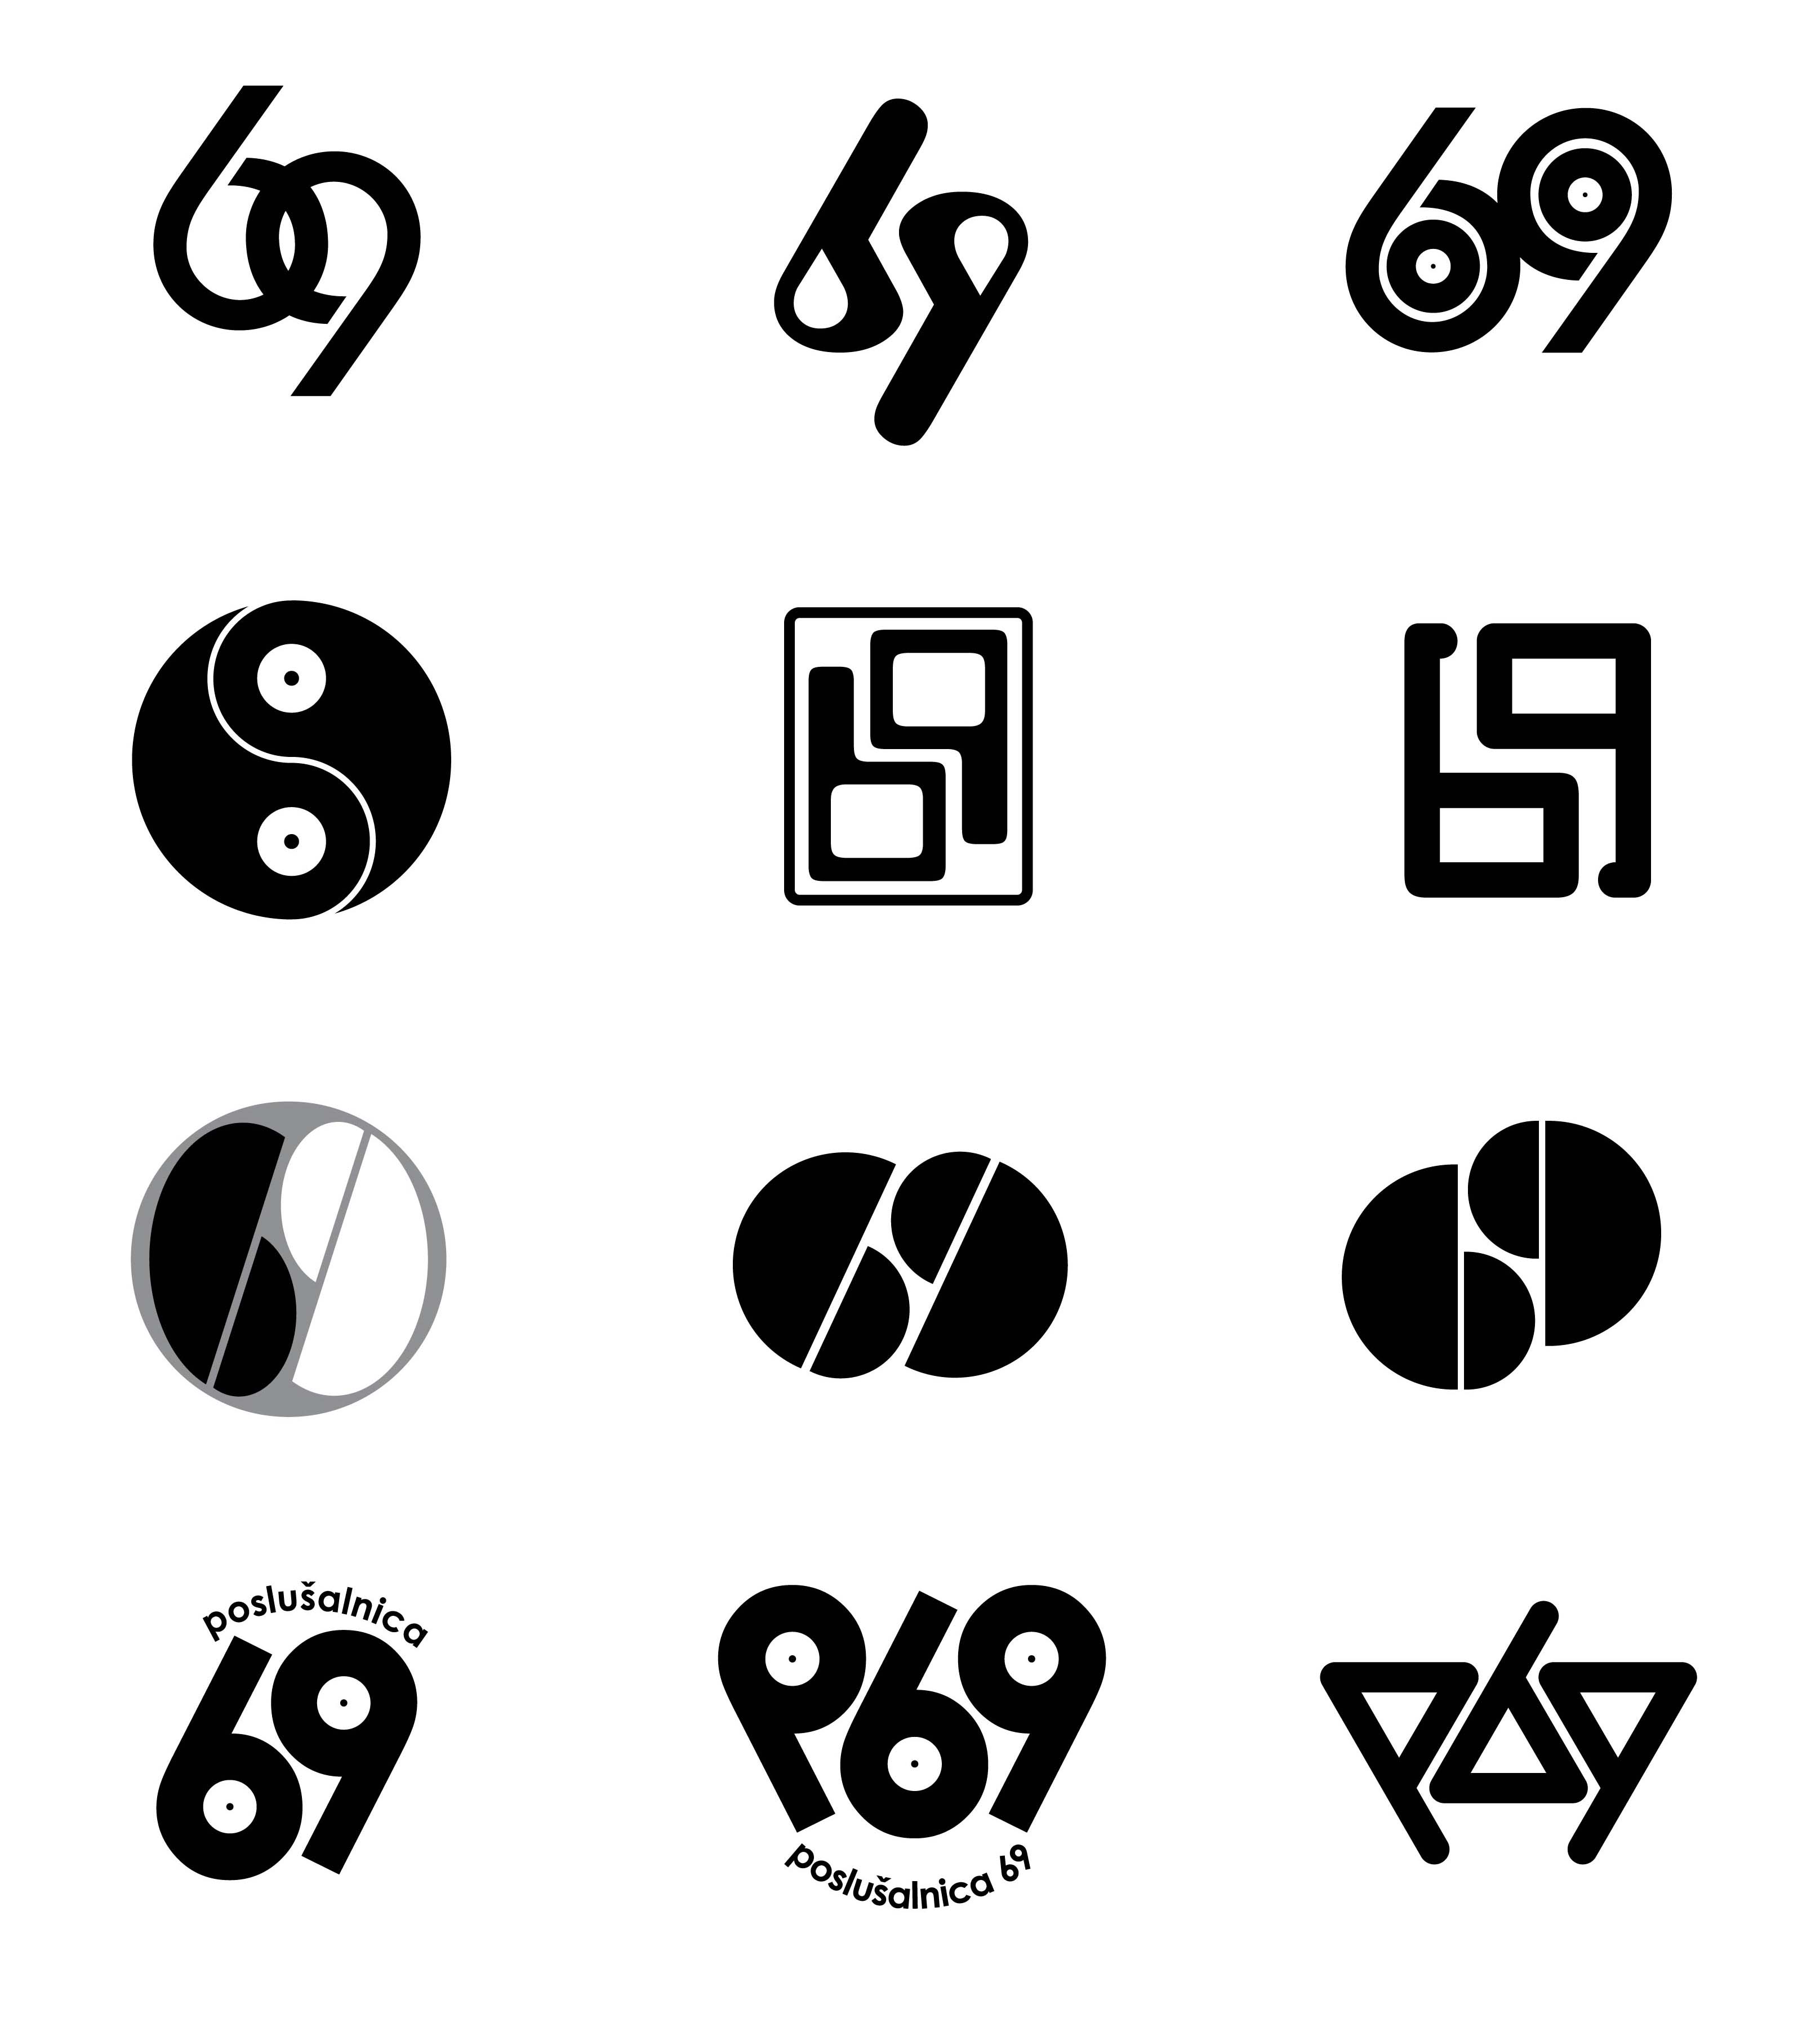 69 Logo - Index of /wordpress/wp-content/uploads/2012/11